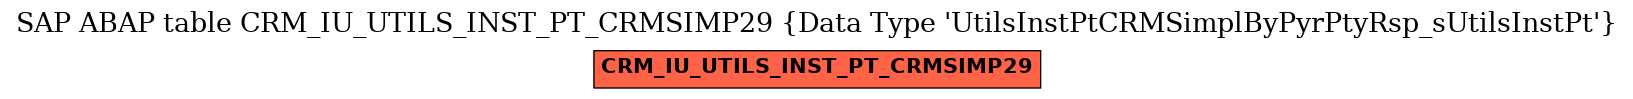 E-R Diagram for table CRM_IU_UTILS_INST_PT_CRMSIMP29 (Data Type 